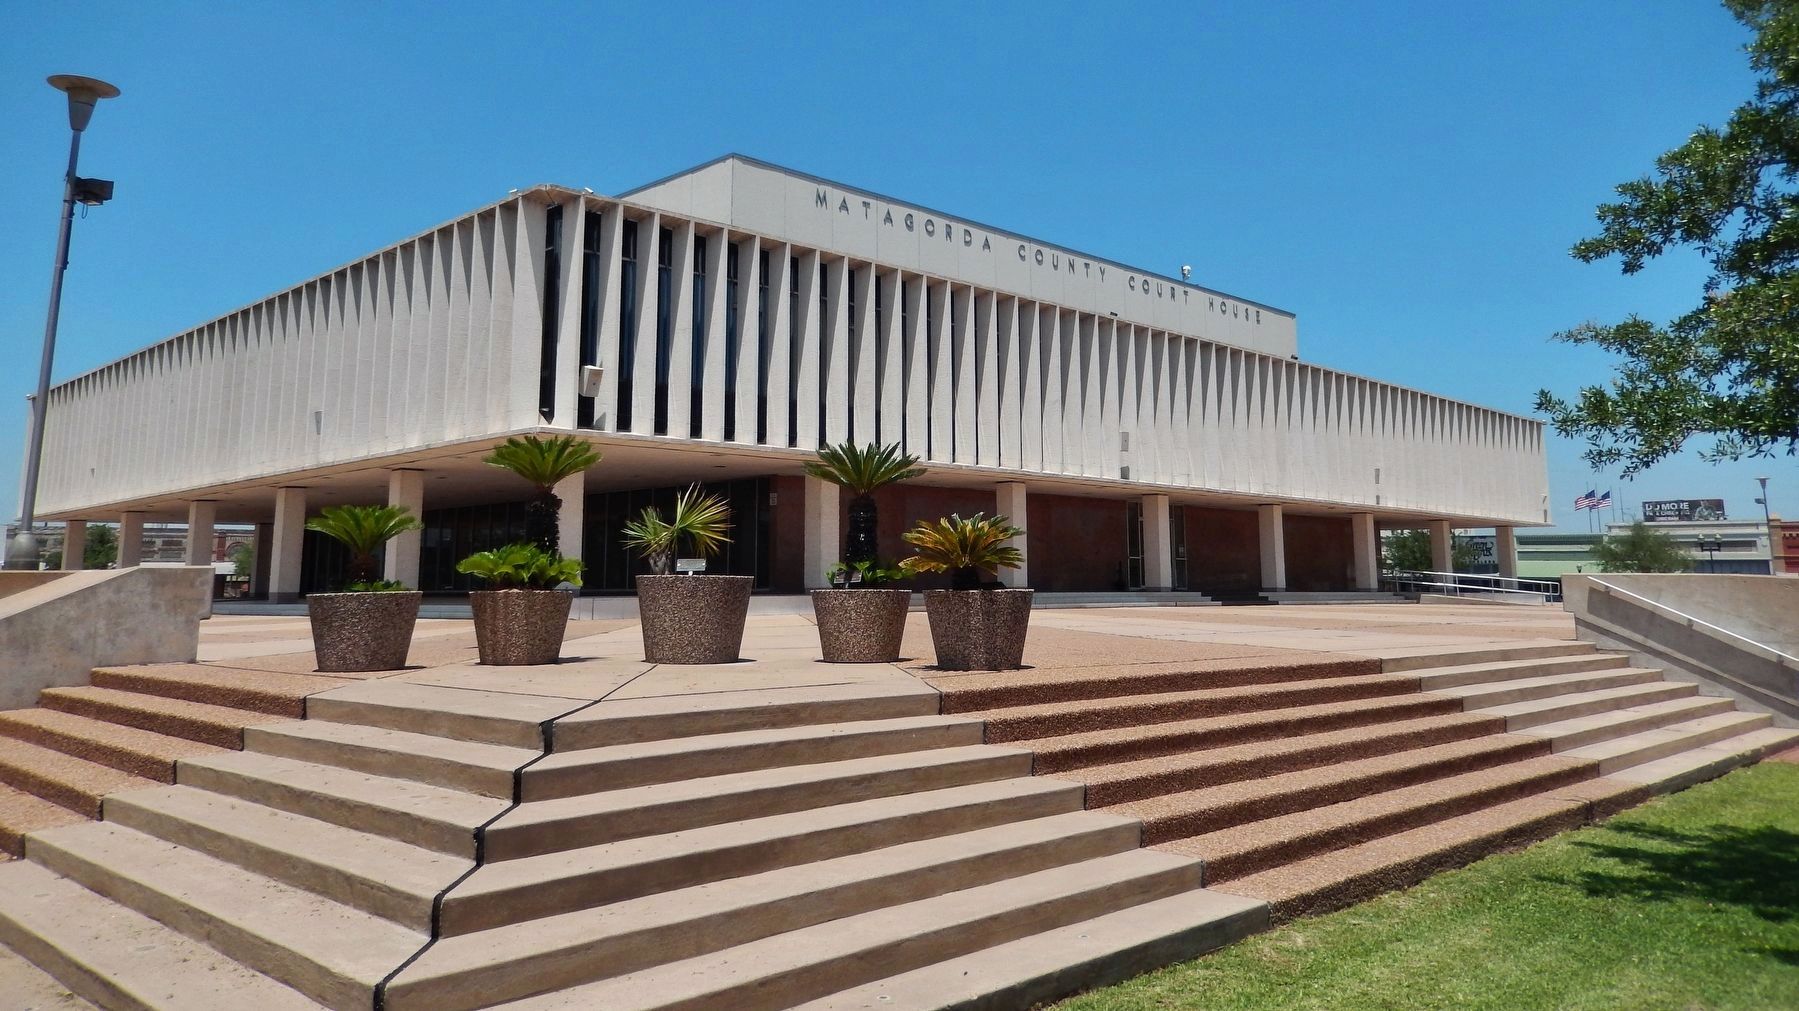 Matagorda County Courthouse (<i>southwest corner view</i>) image. Click for full size.